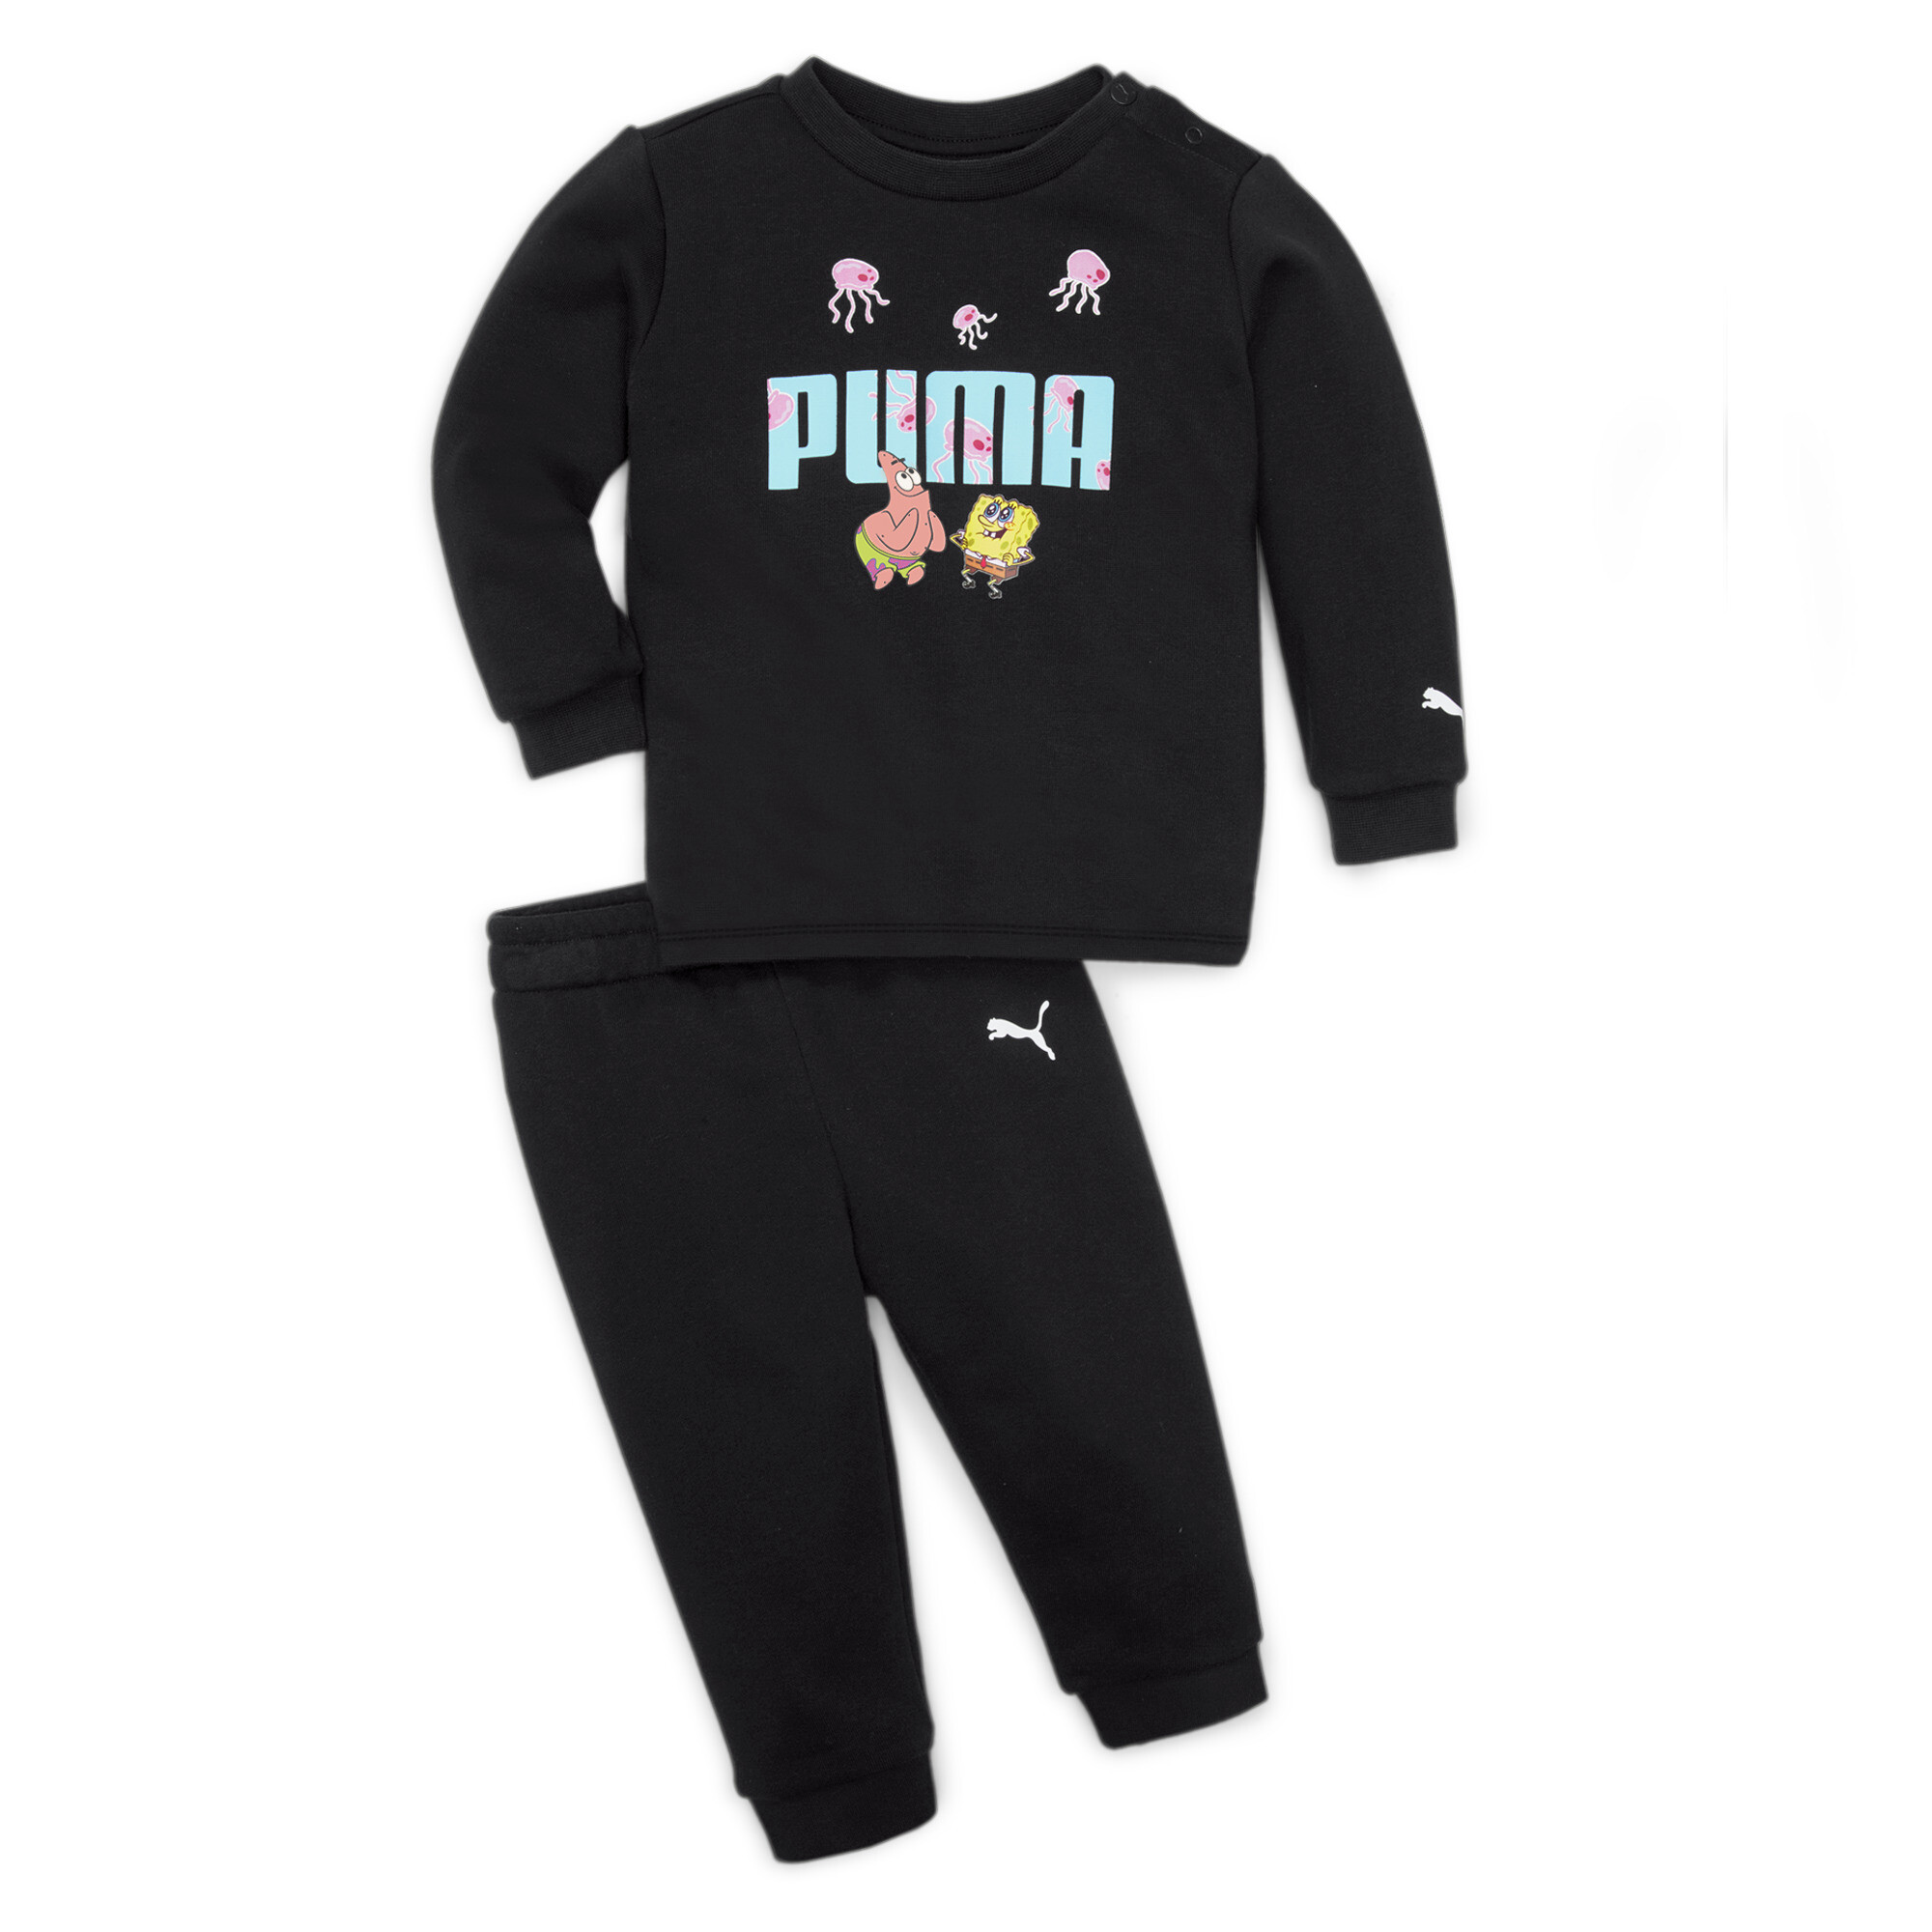 Puma X SPONGEBOB Jogger Set Kids, Black, Size 9-12M, Clothing